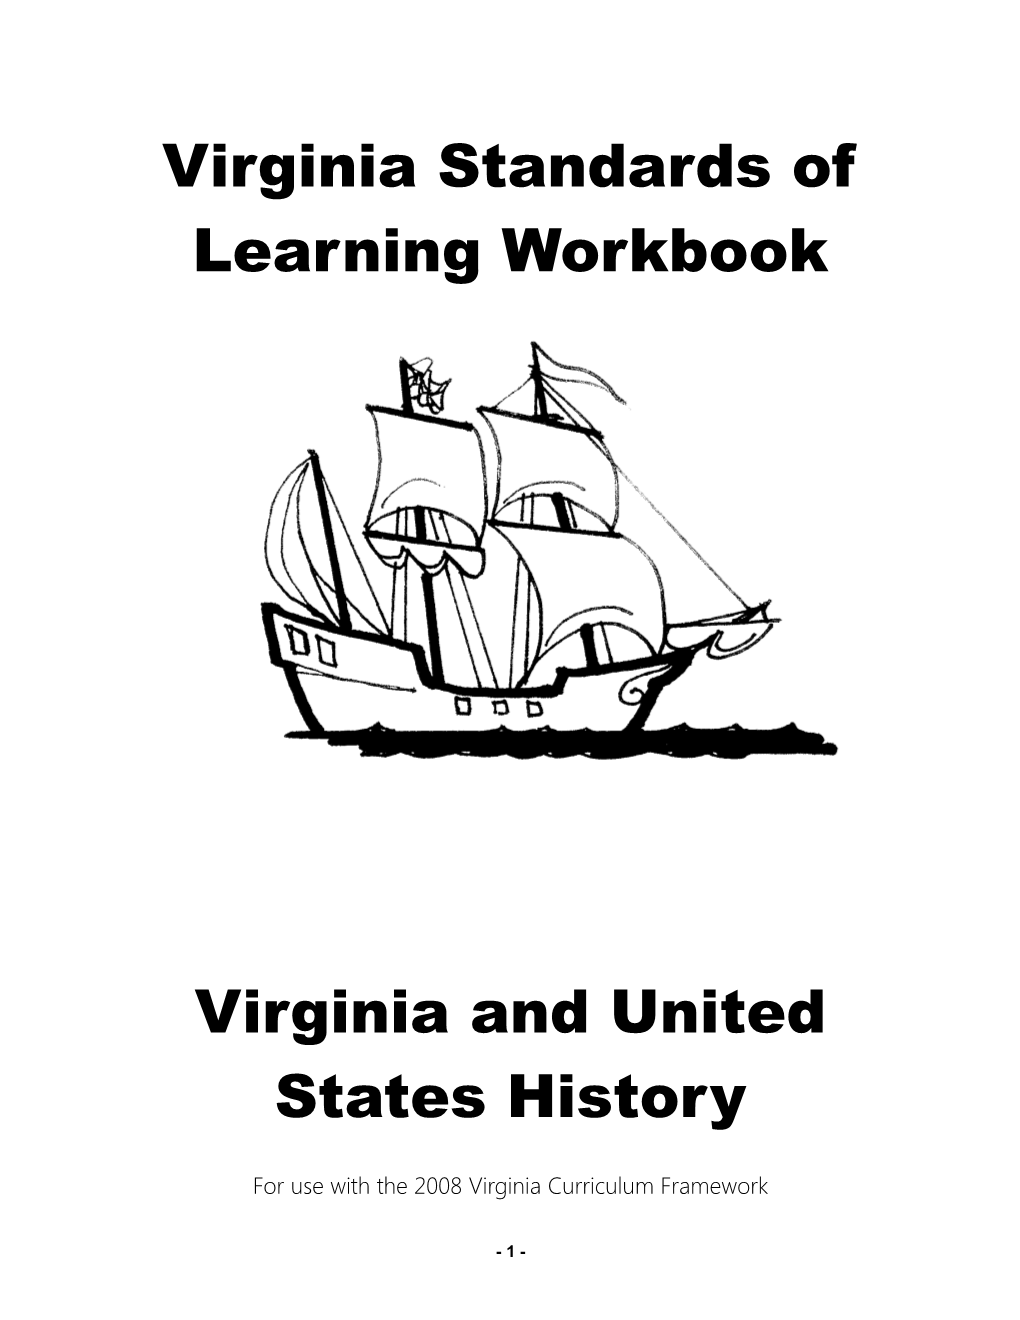 Virginia Standards of Learning Workbook